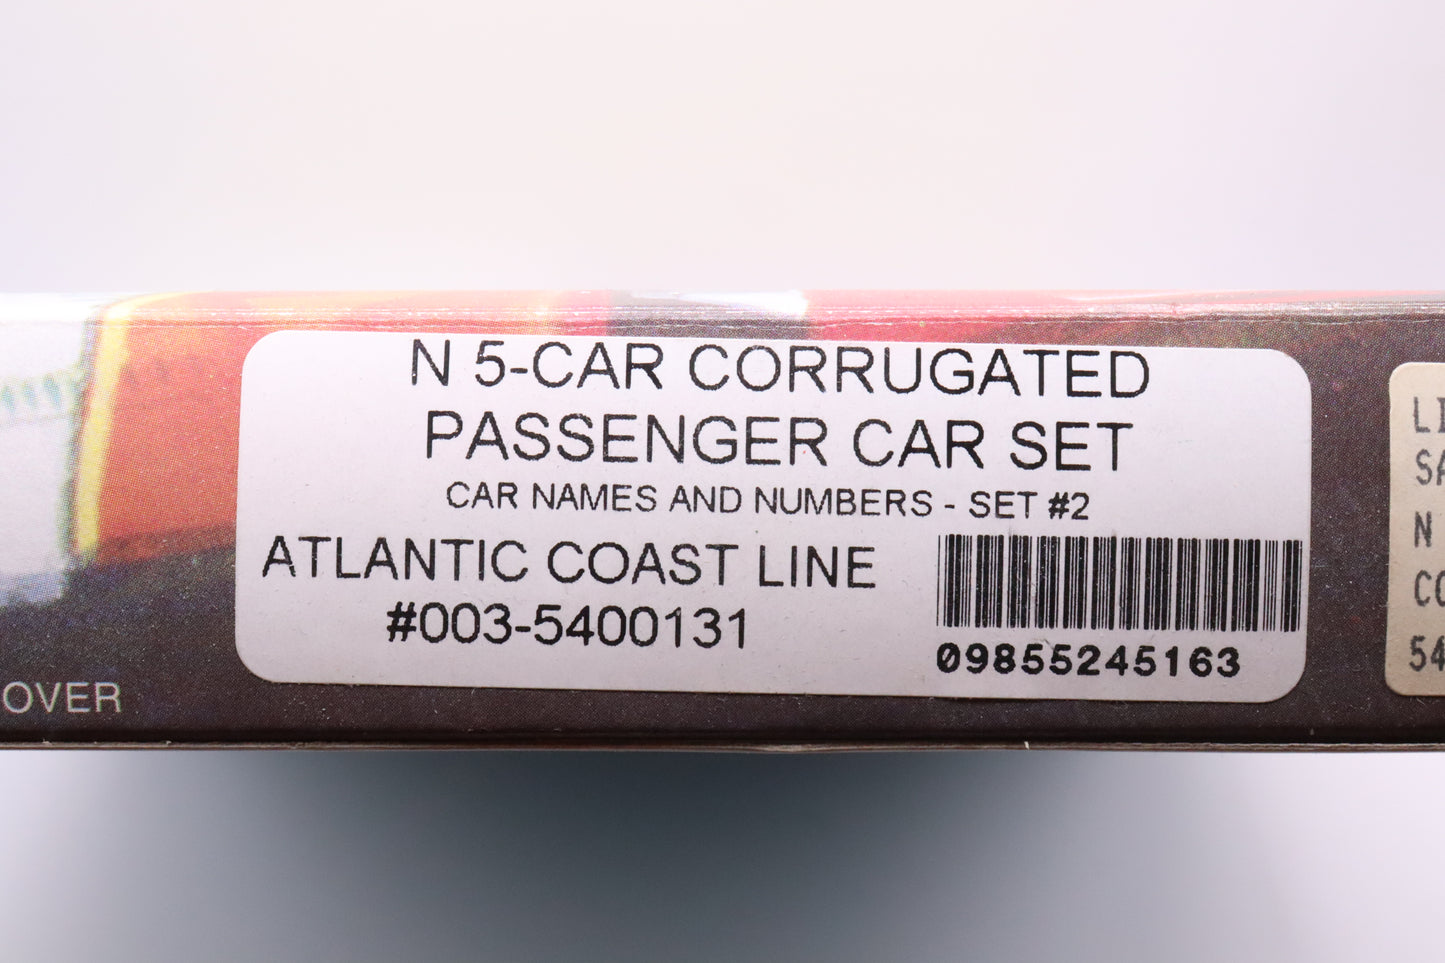 CC-003-5400131 - 5-Car Corrugated Passenger Car Set #2 - Atlantic Coast Line